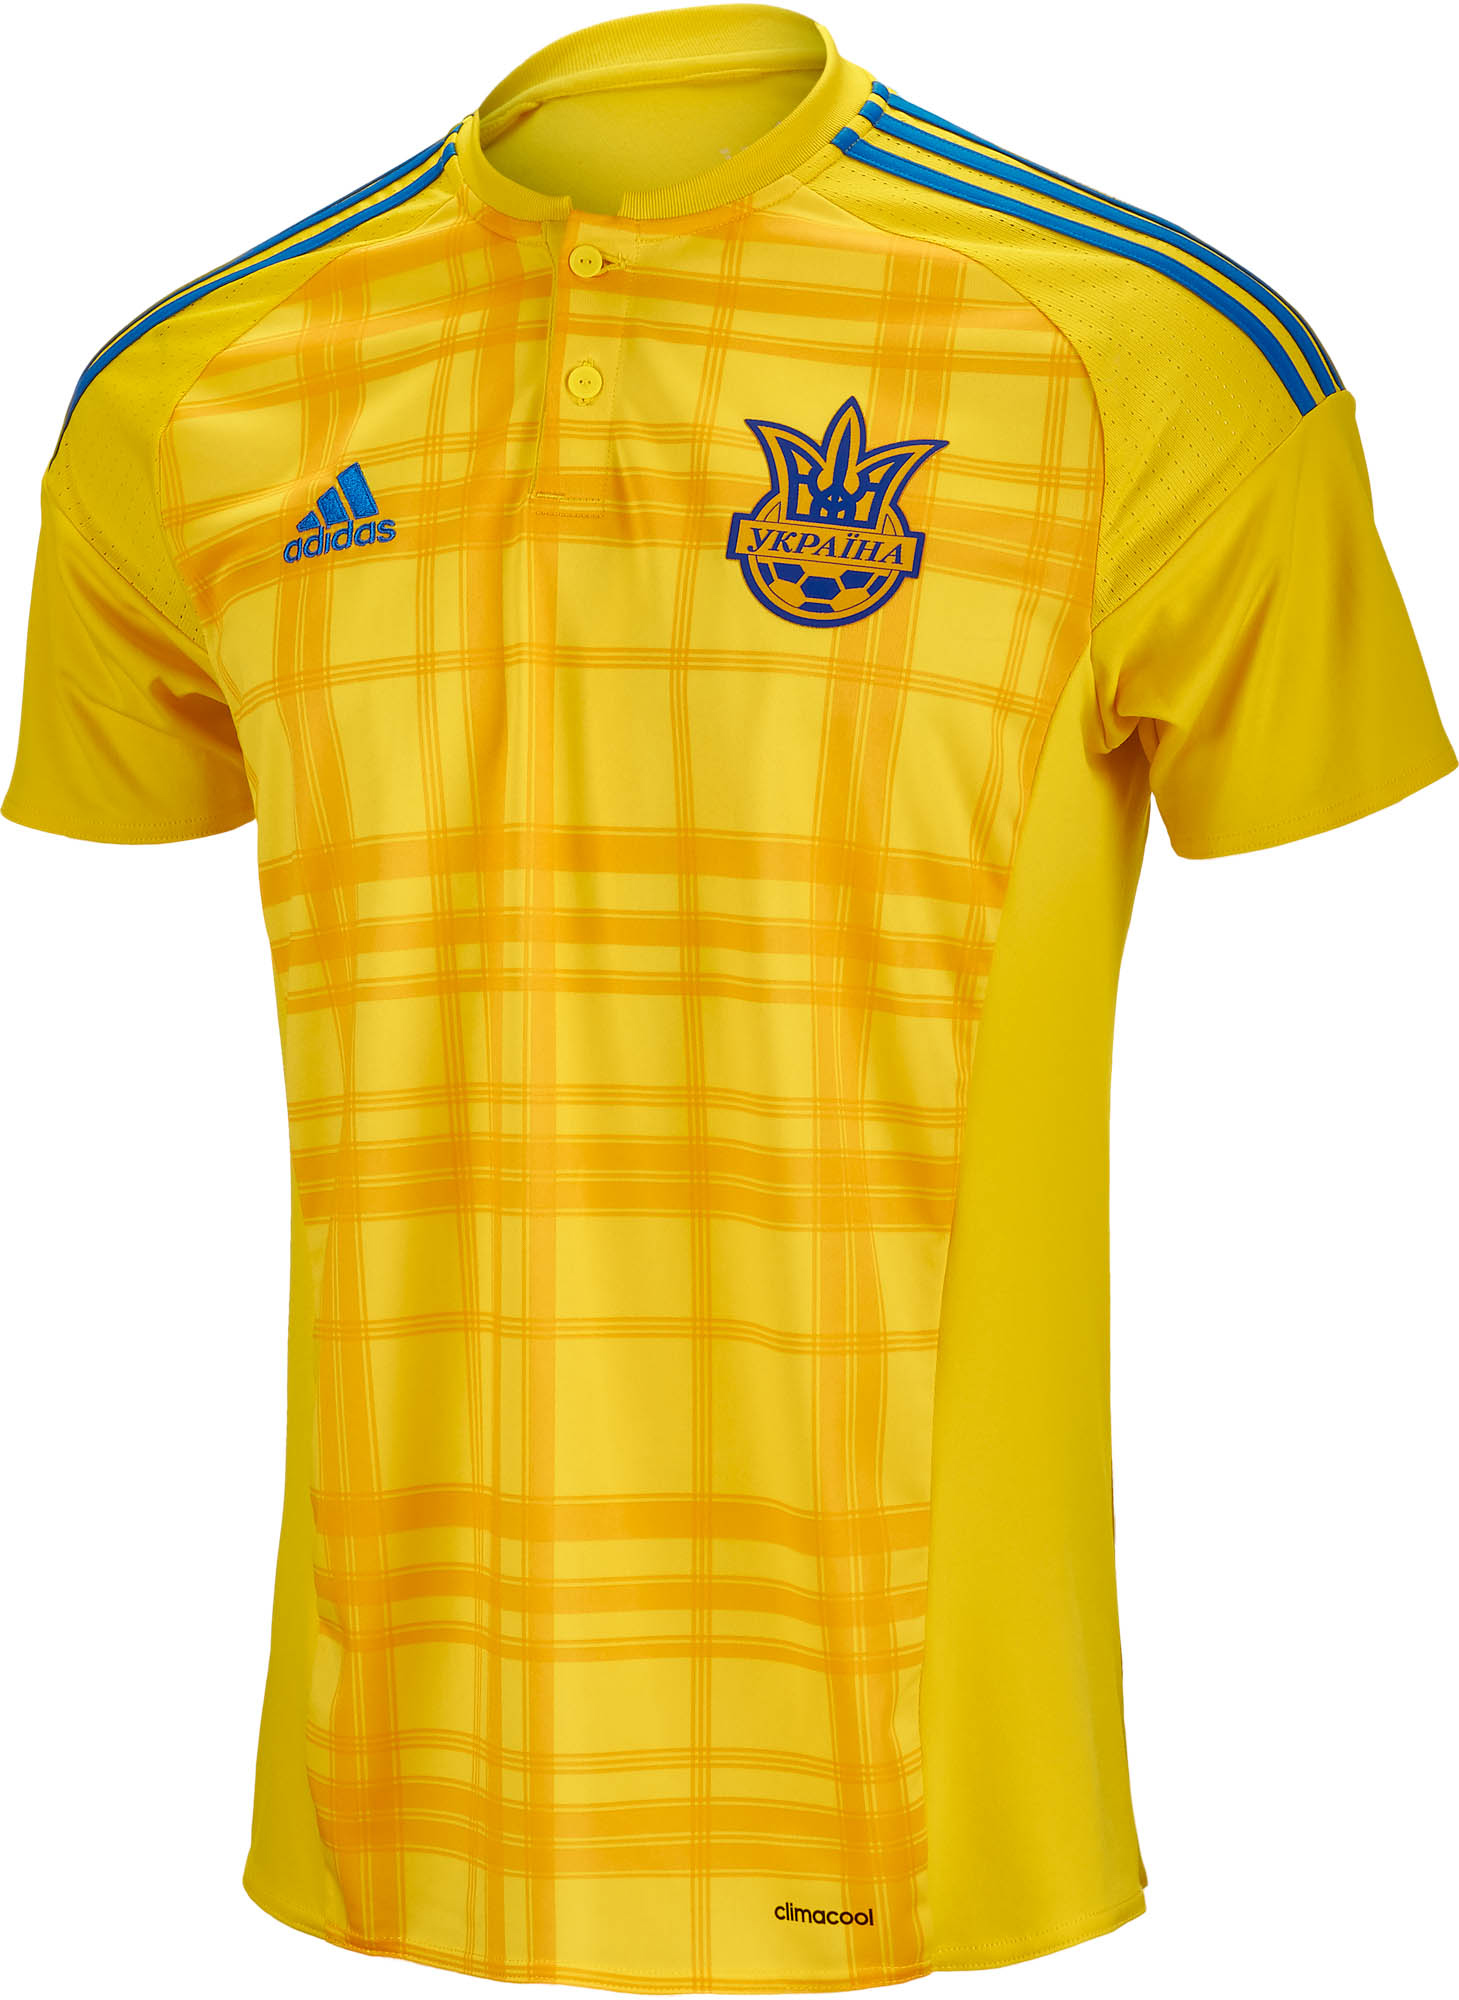 adidas Ukraine Away Jersey - 2016 Ukraine Soccer Jerseys